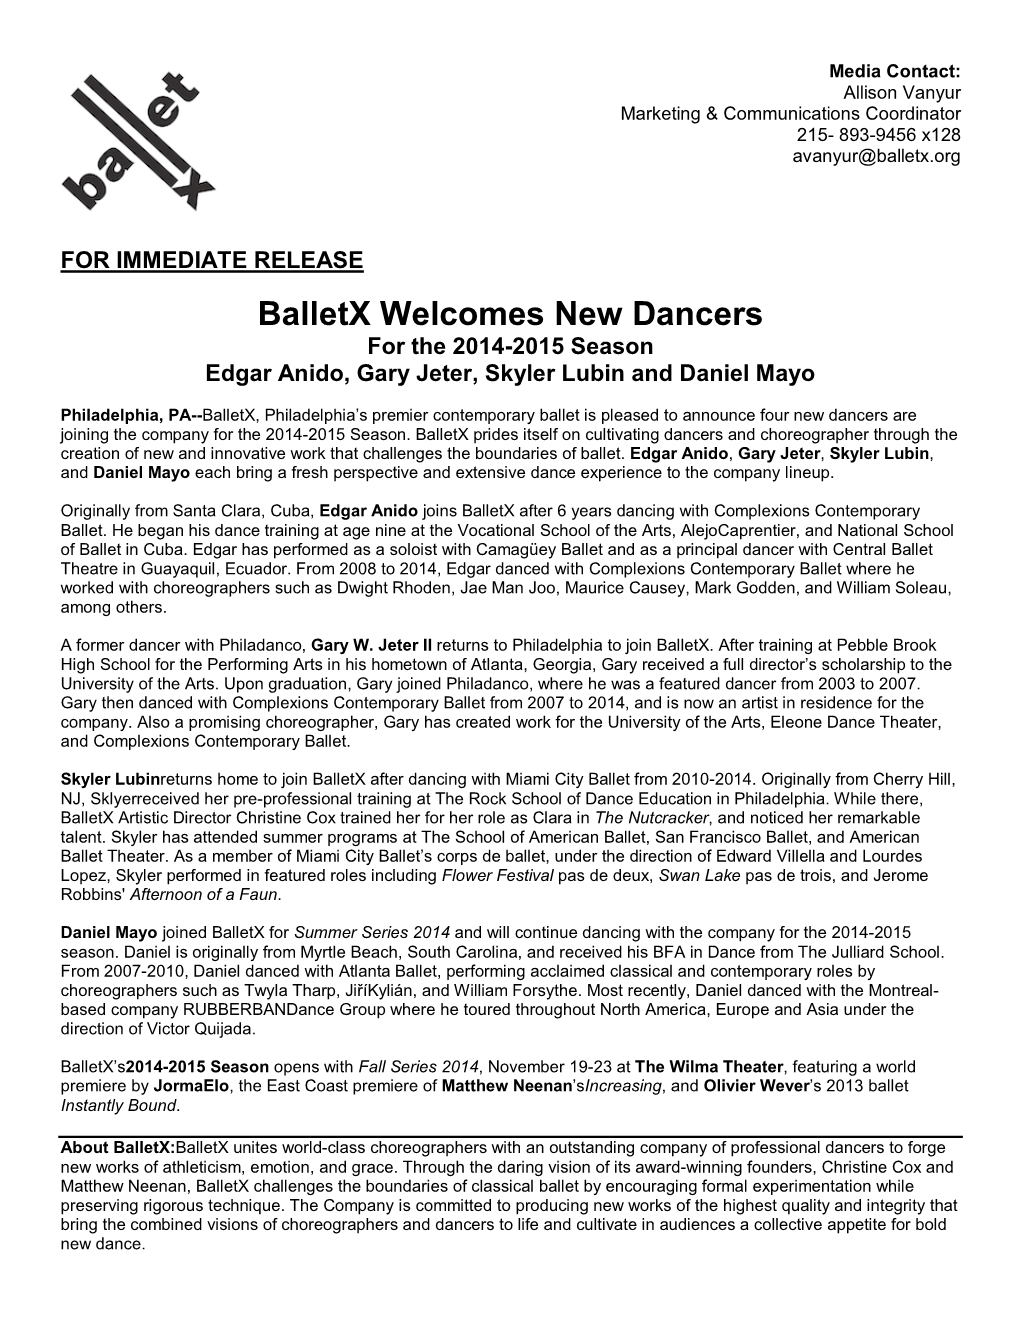 Balletx Welcomes New Dancers for the 2014-2015 Season Edgar Anido, Gary Jeter, Skyler Lubin and Daniel Mayo